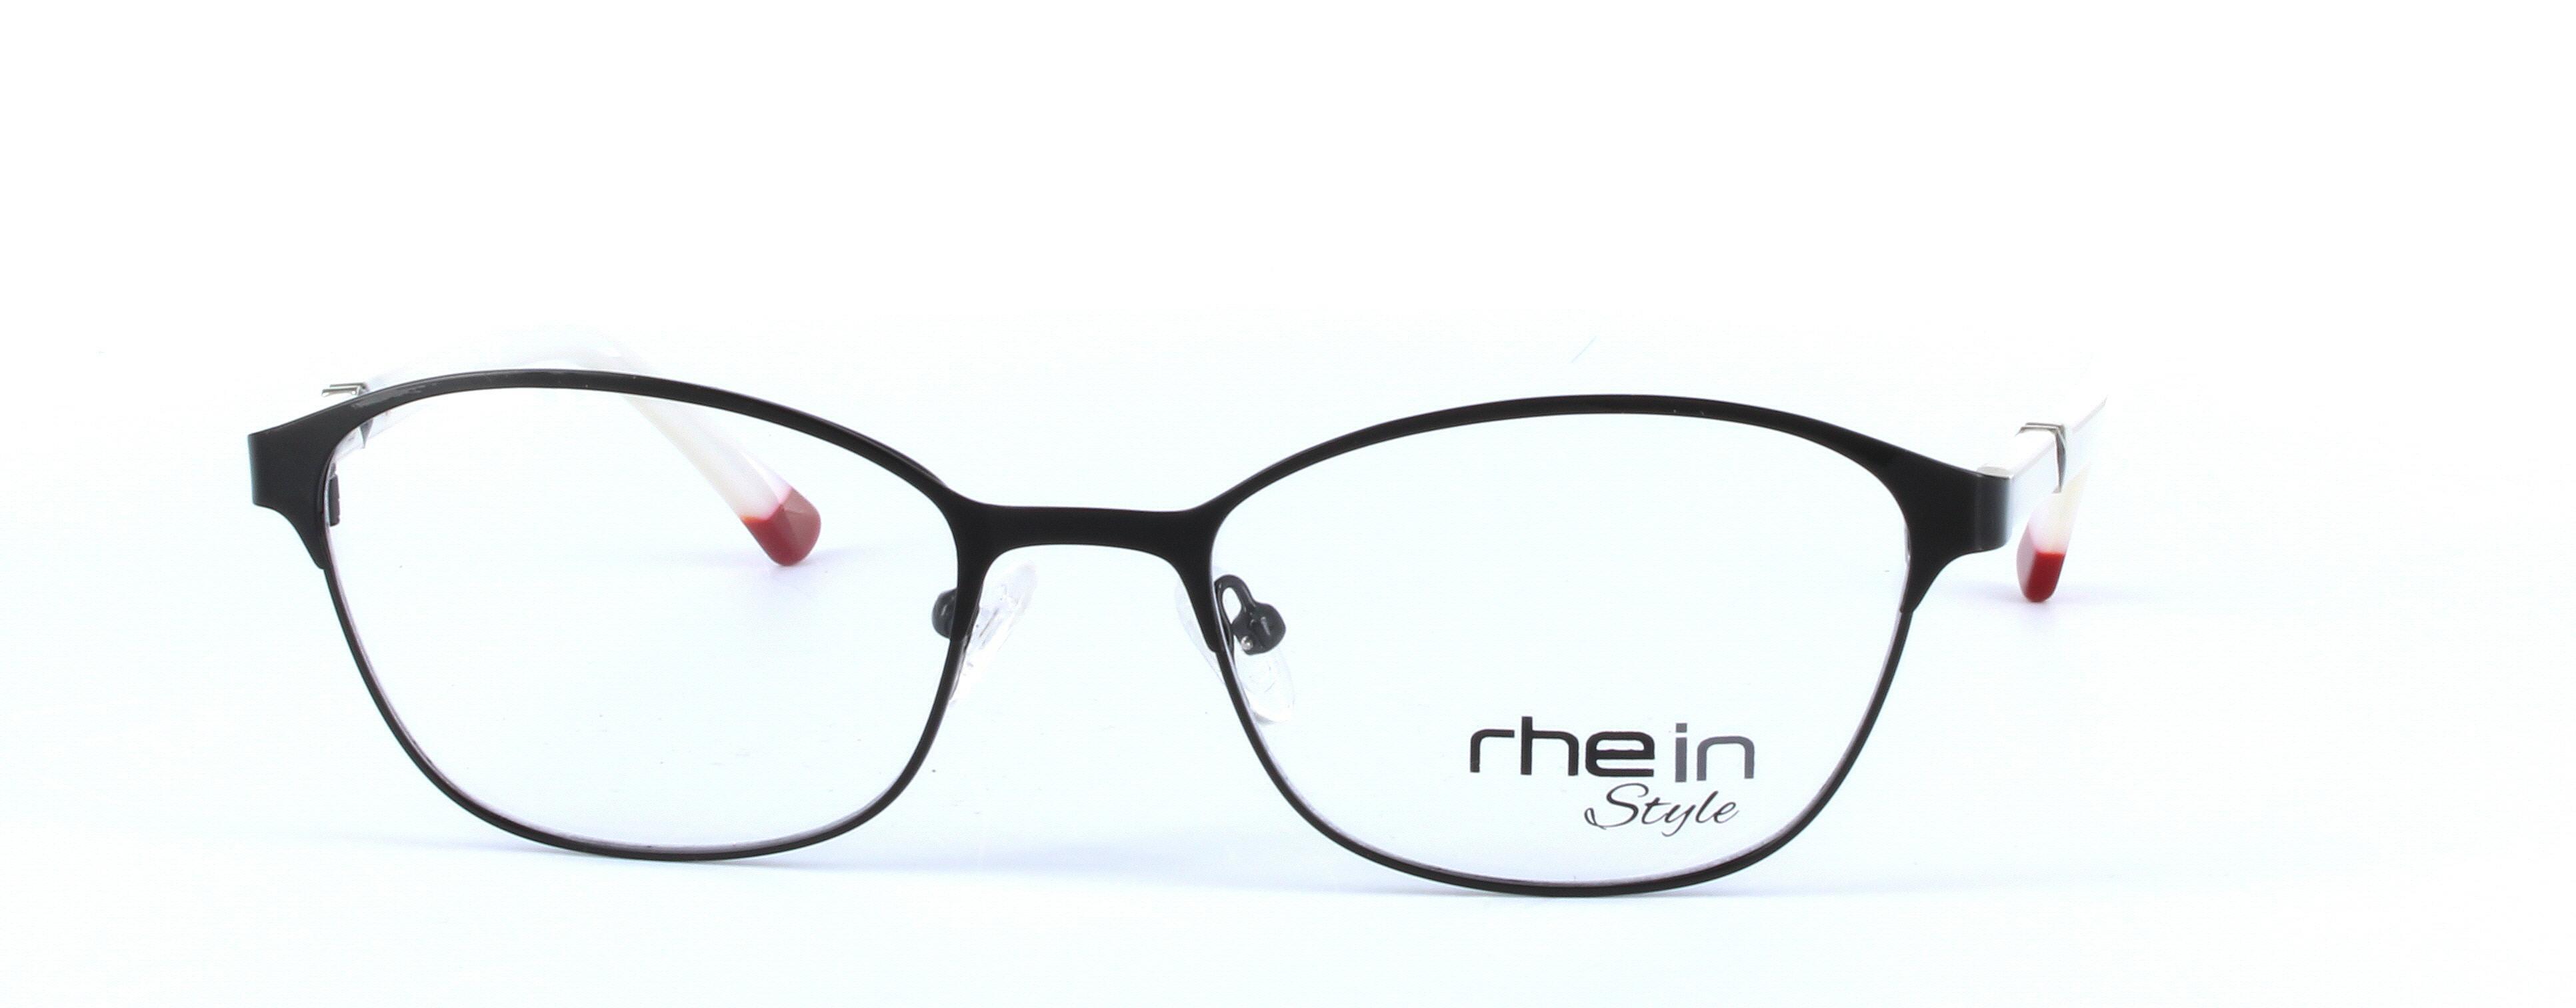 Omma Black Full Rim Oval Round Metal Glasses  - Image View 5